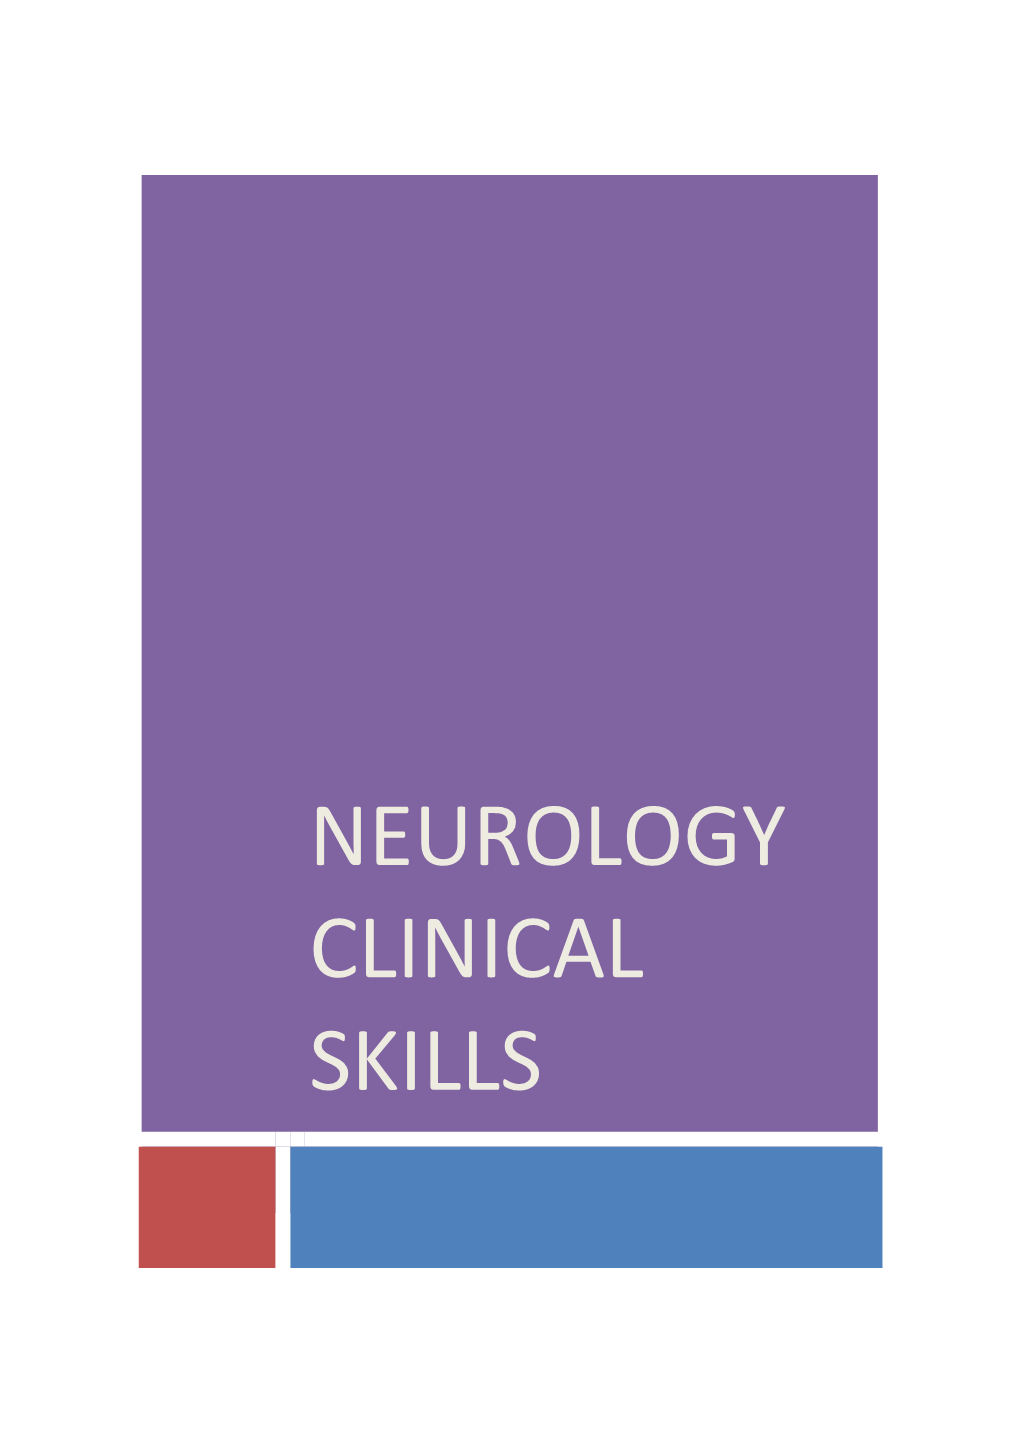 Neurology Clinical Skills Booklet